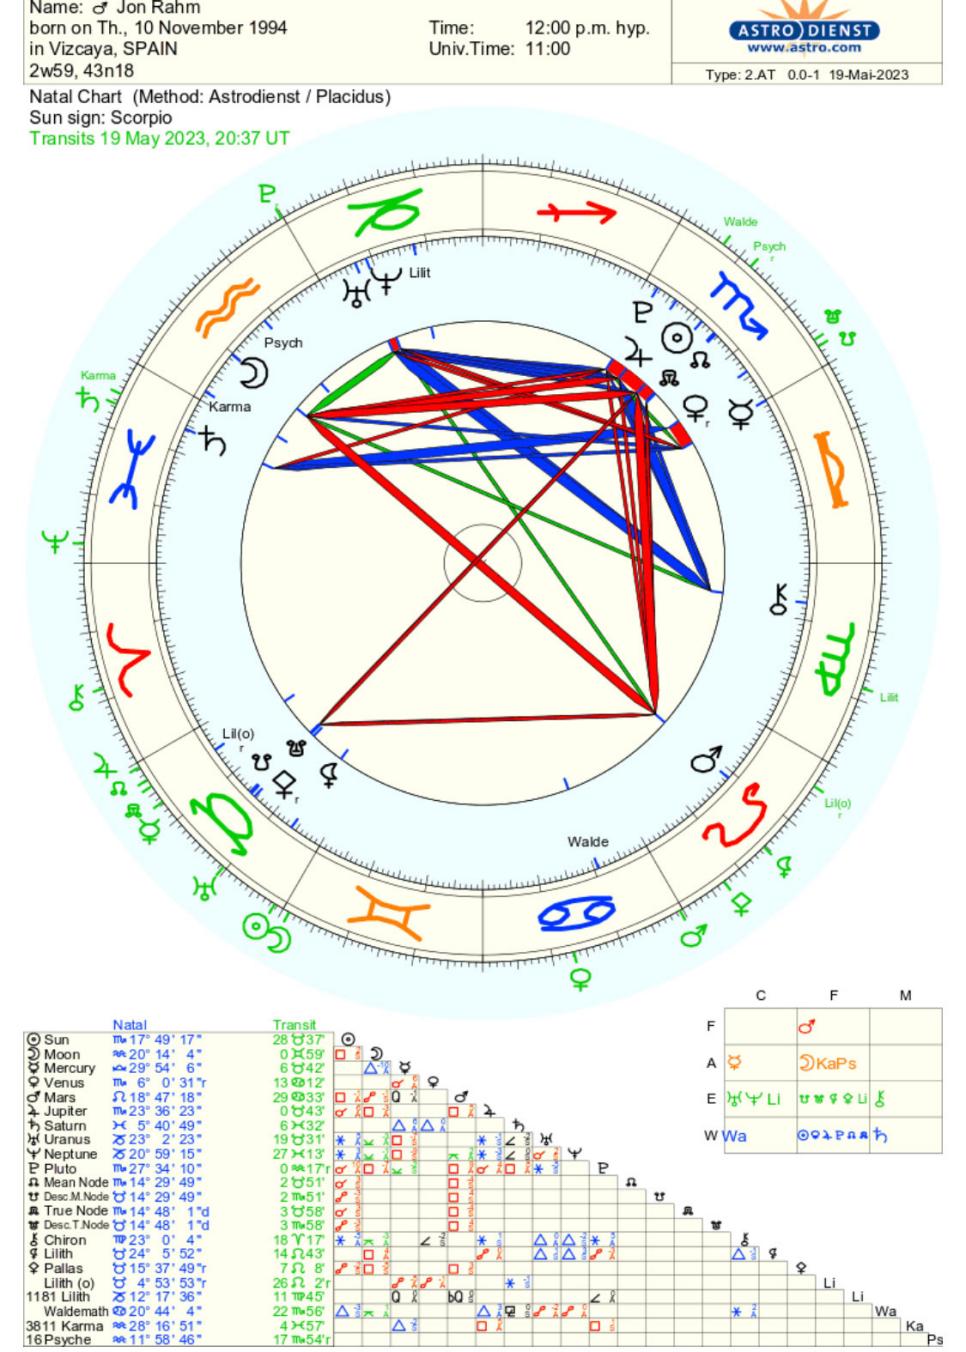 /content/dam/images/golfdigest/fullset/2023/5/Jon-Rahm-astrological-chart.jpg